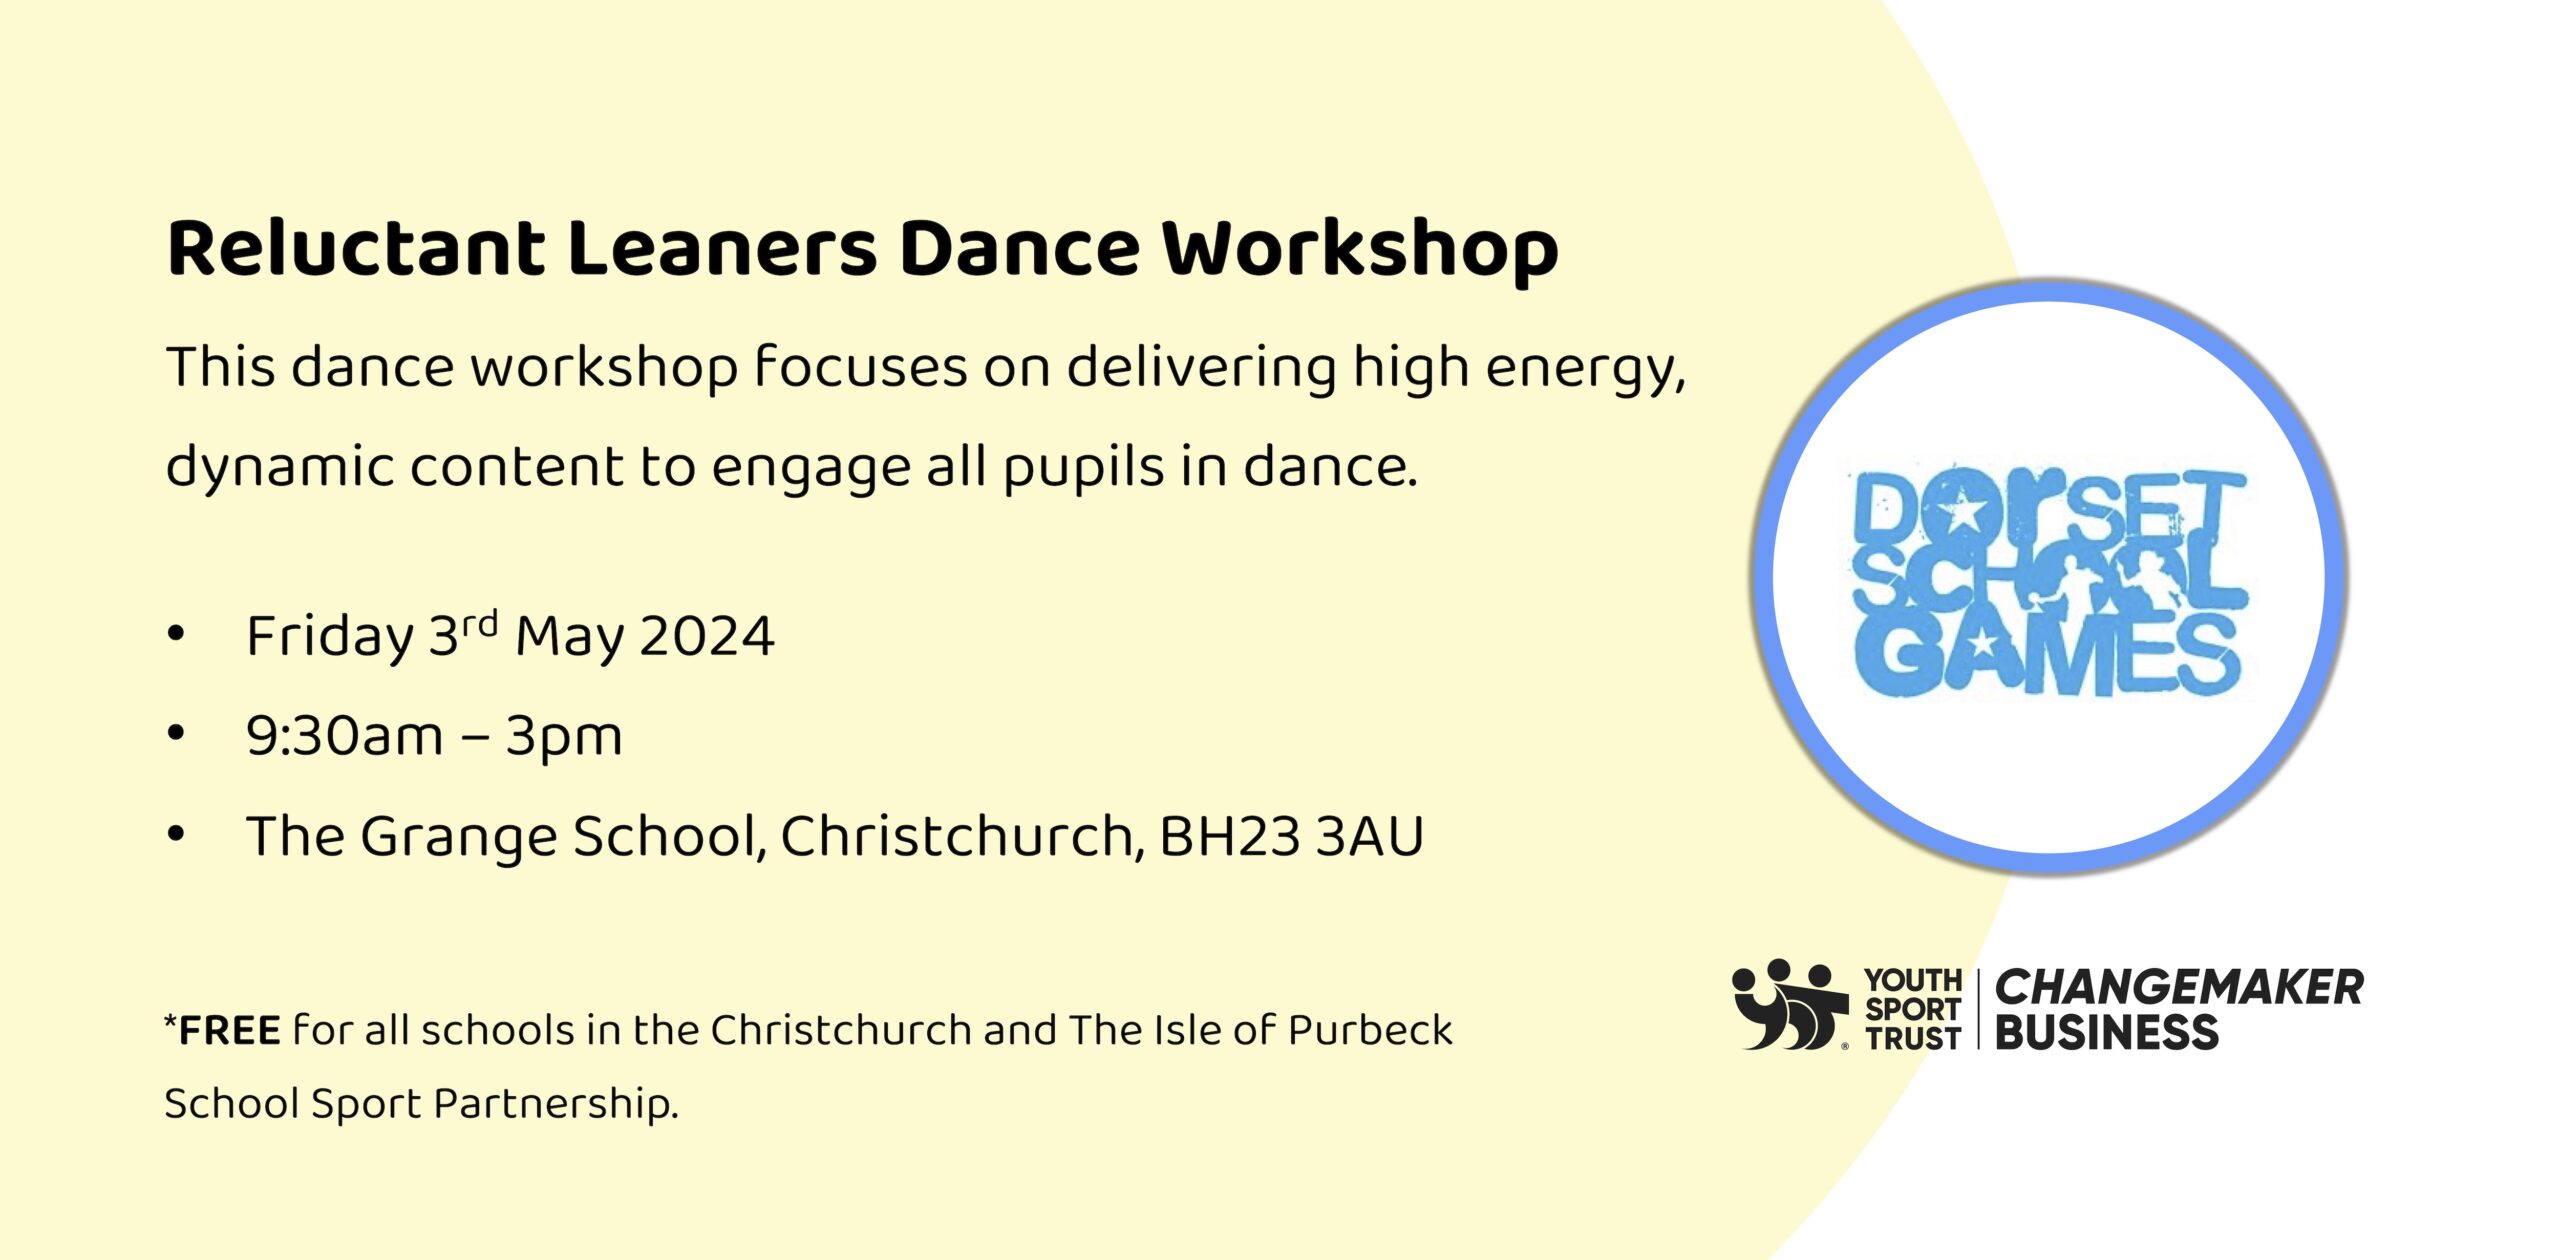 Dorset | Reluctant Learners Dance Workshop